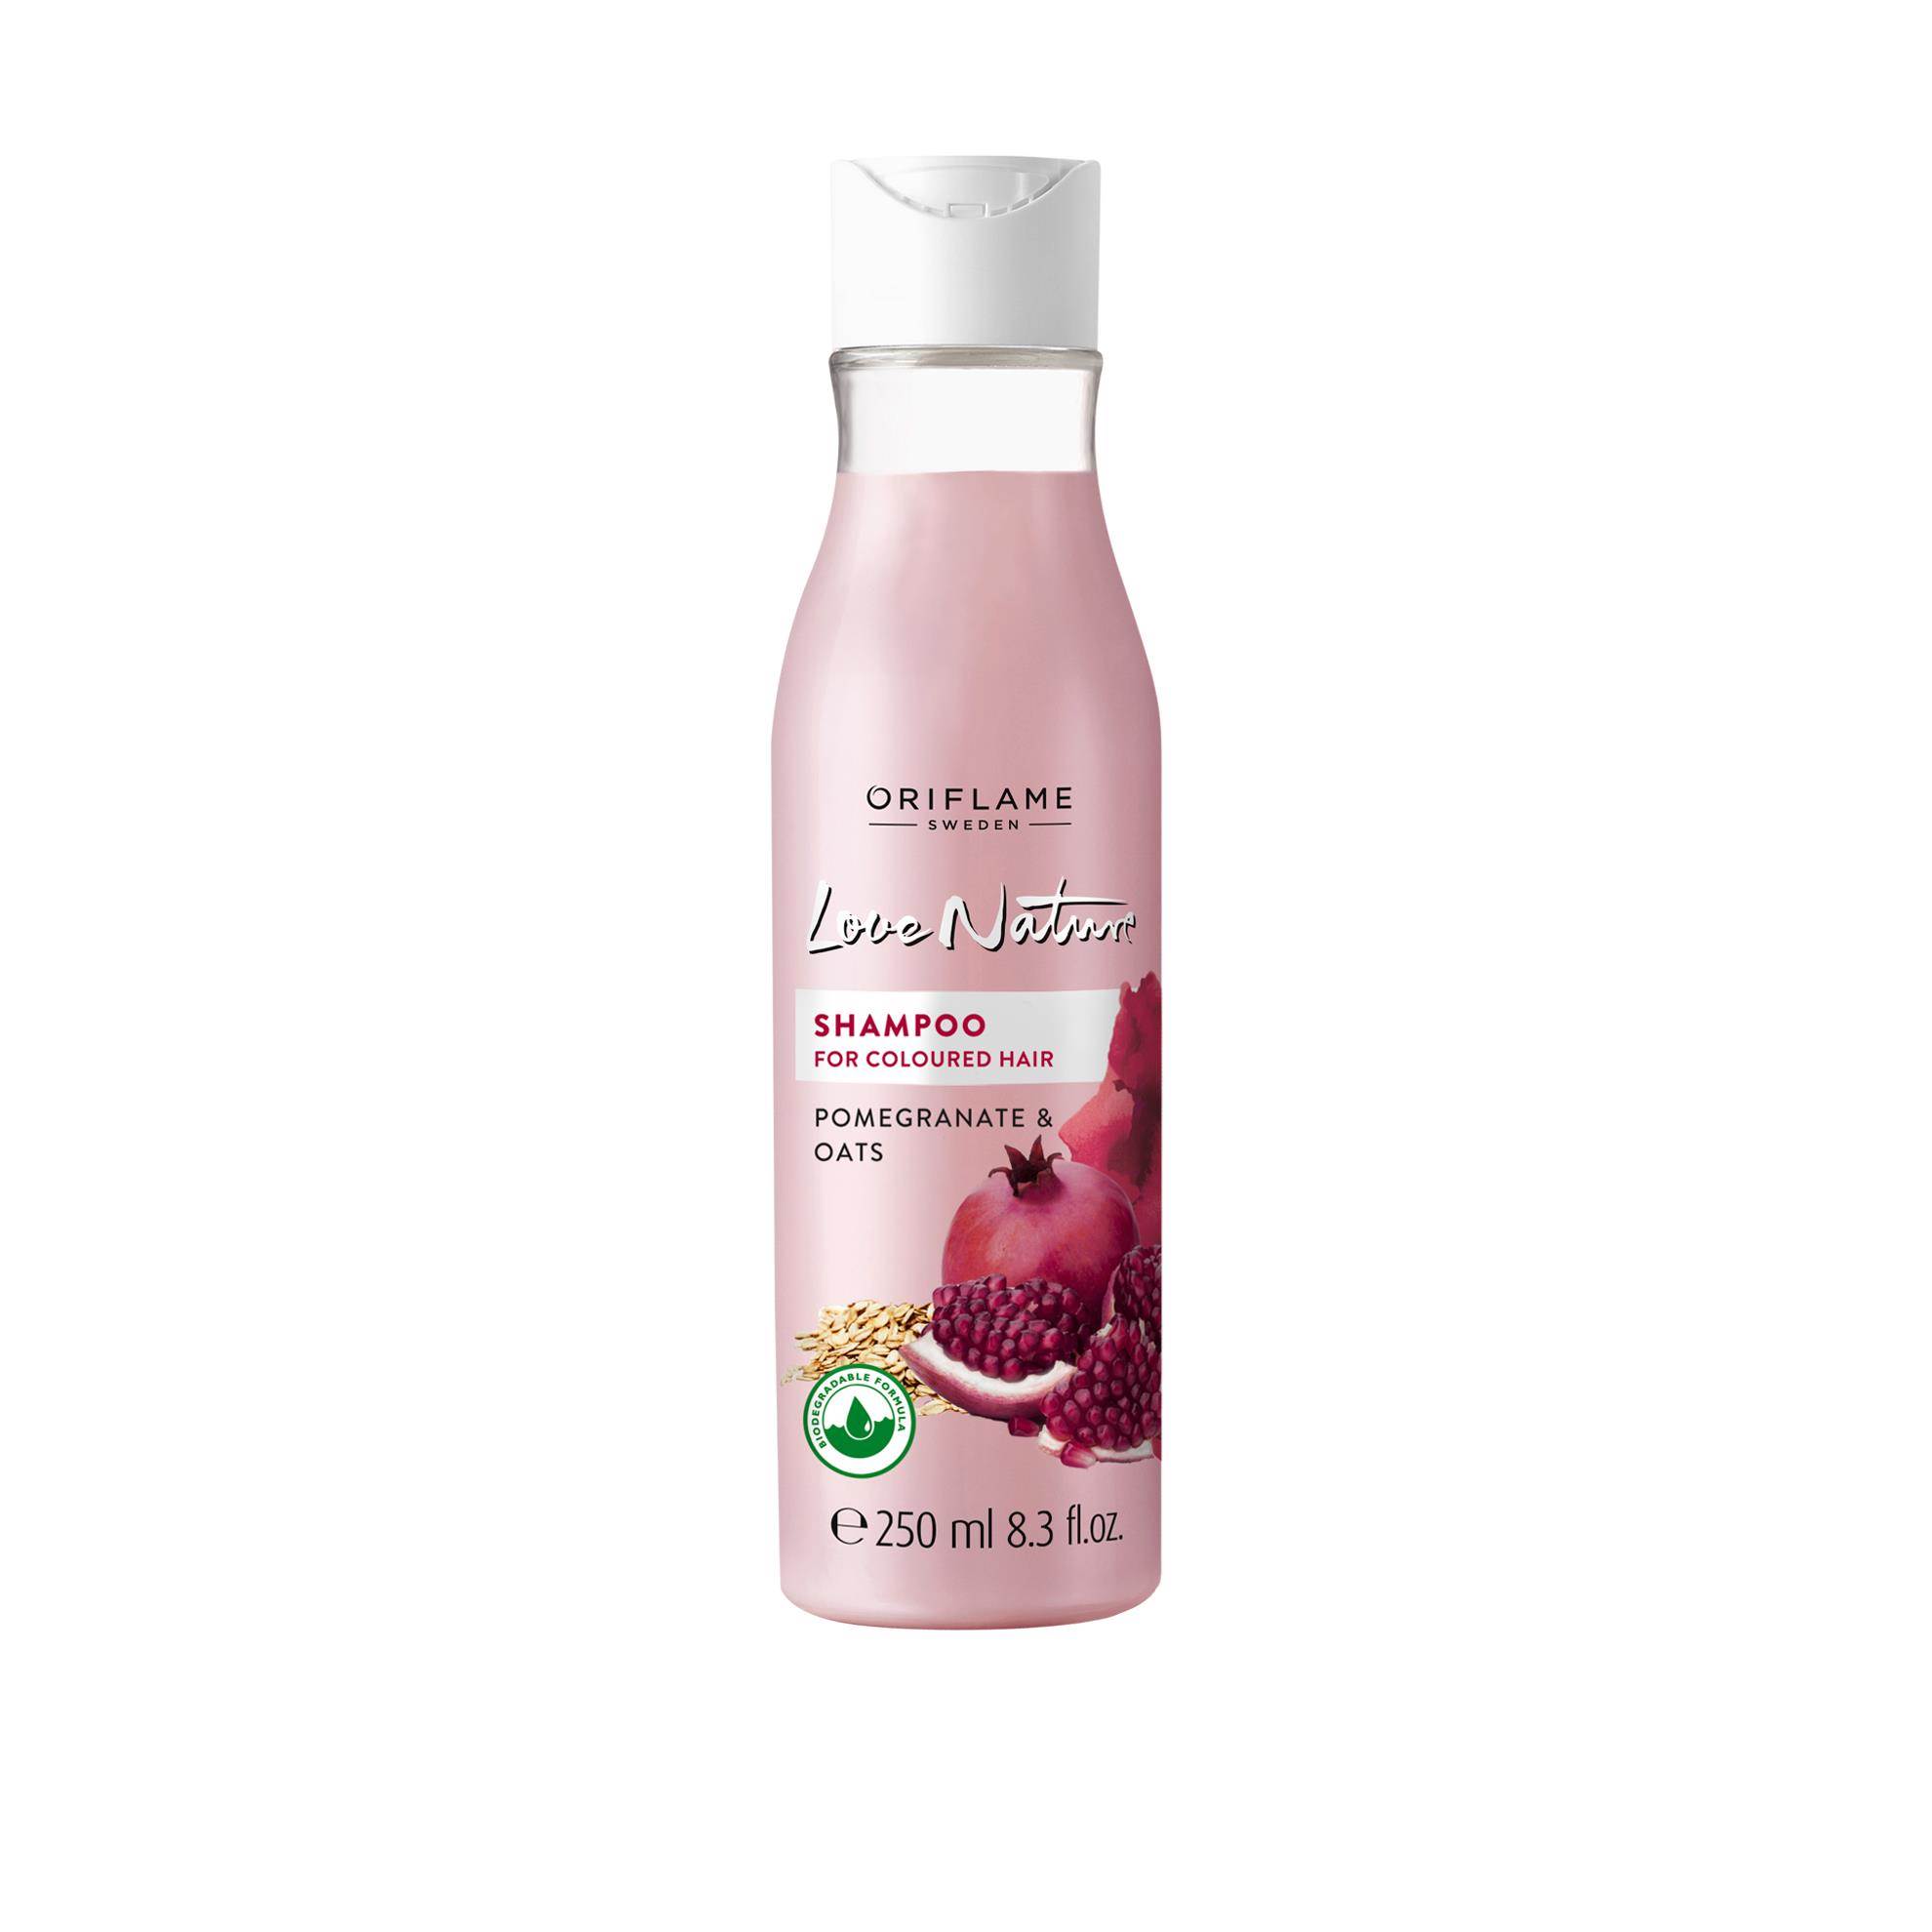 love-nature-shampoo-for-coloured-hair-pomegranate-oats